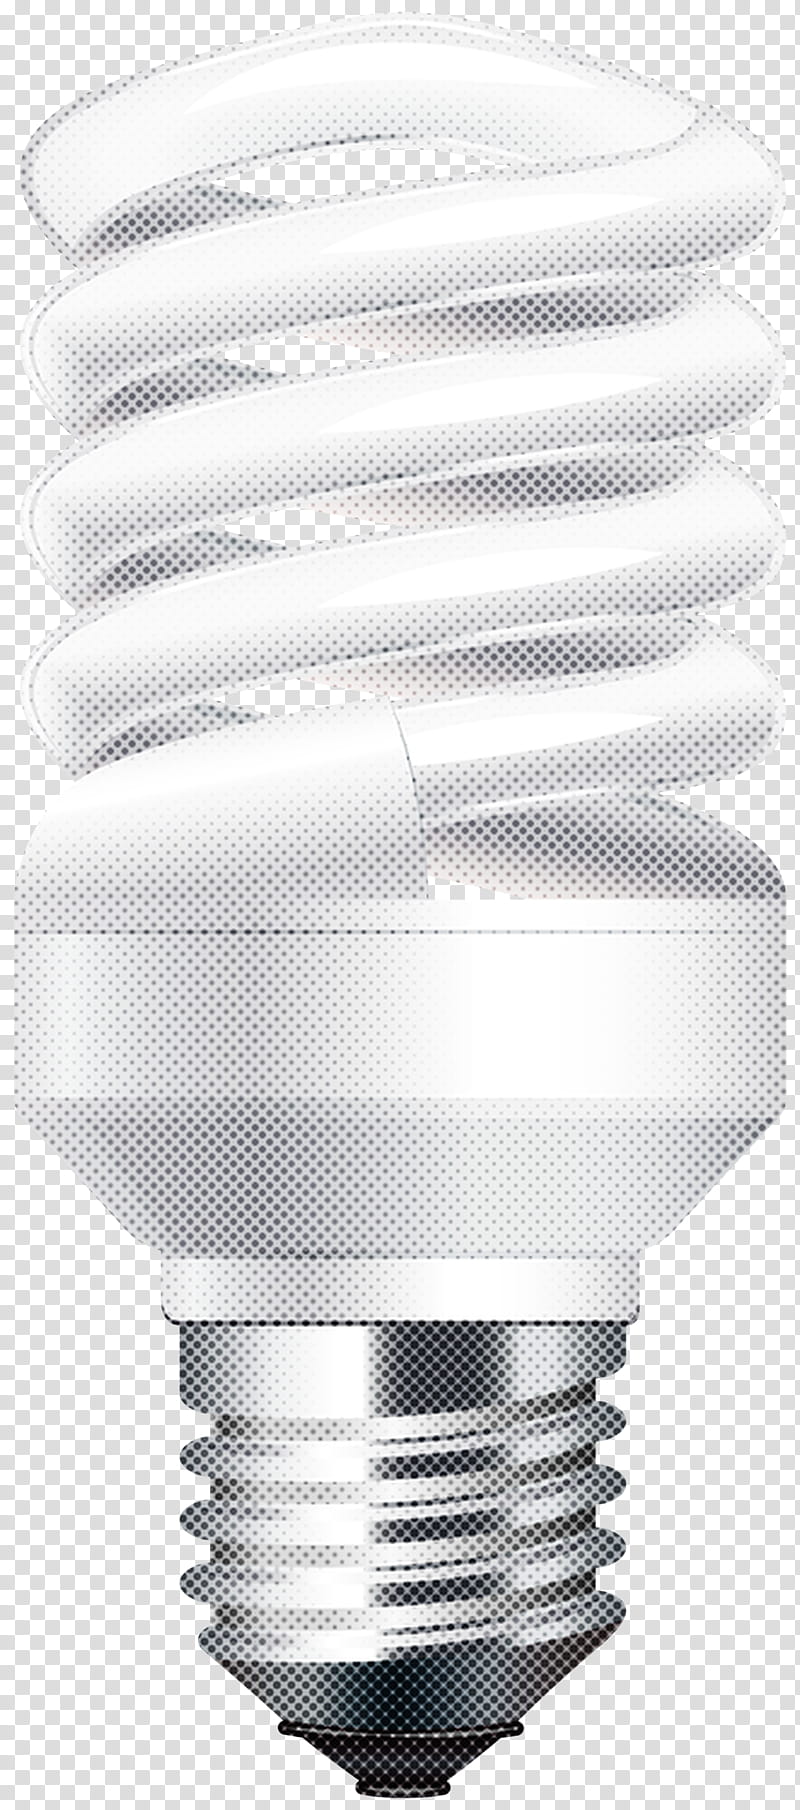 Light bulb, White, Lighting, Compact Fluorescent Lamp, Light Fixture, Incandescent Light Bulb transparent background PNG clipart